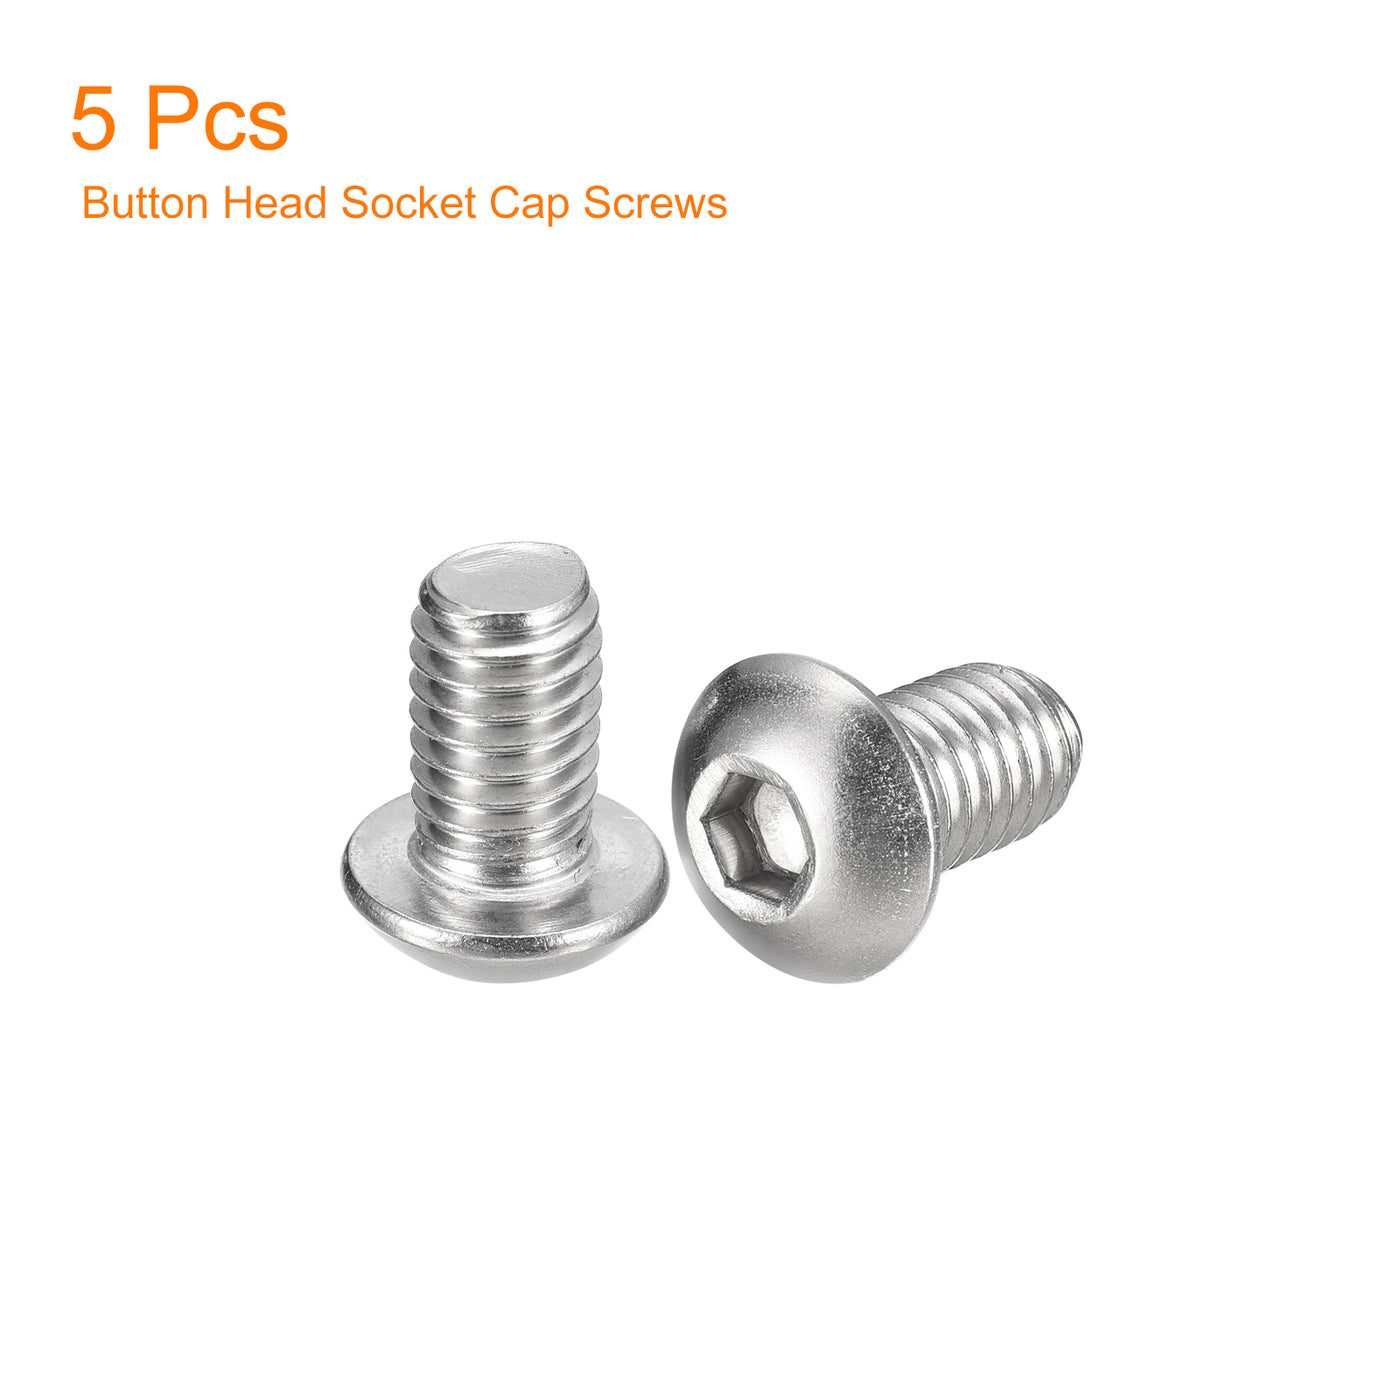 uxcell Uxcell 3/8-16x5/8" Button Head Socket Cap Screws, 5pcs 304 Stainless Steel Screws